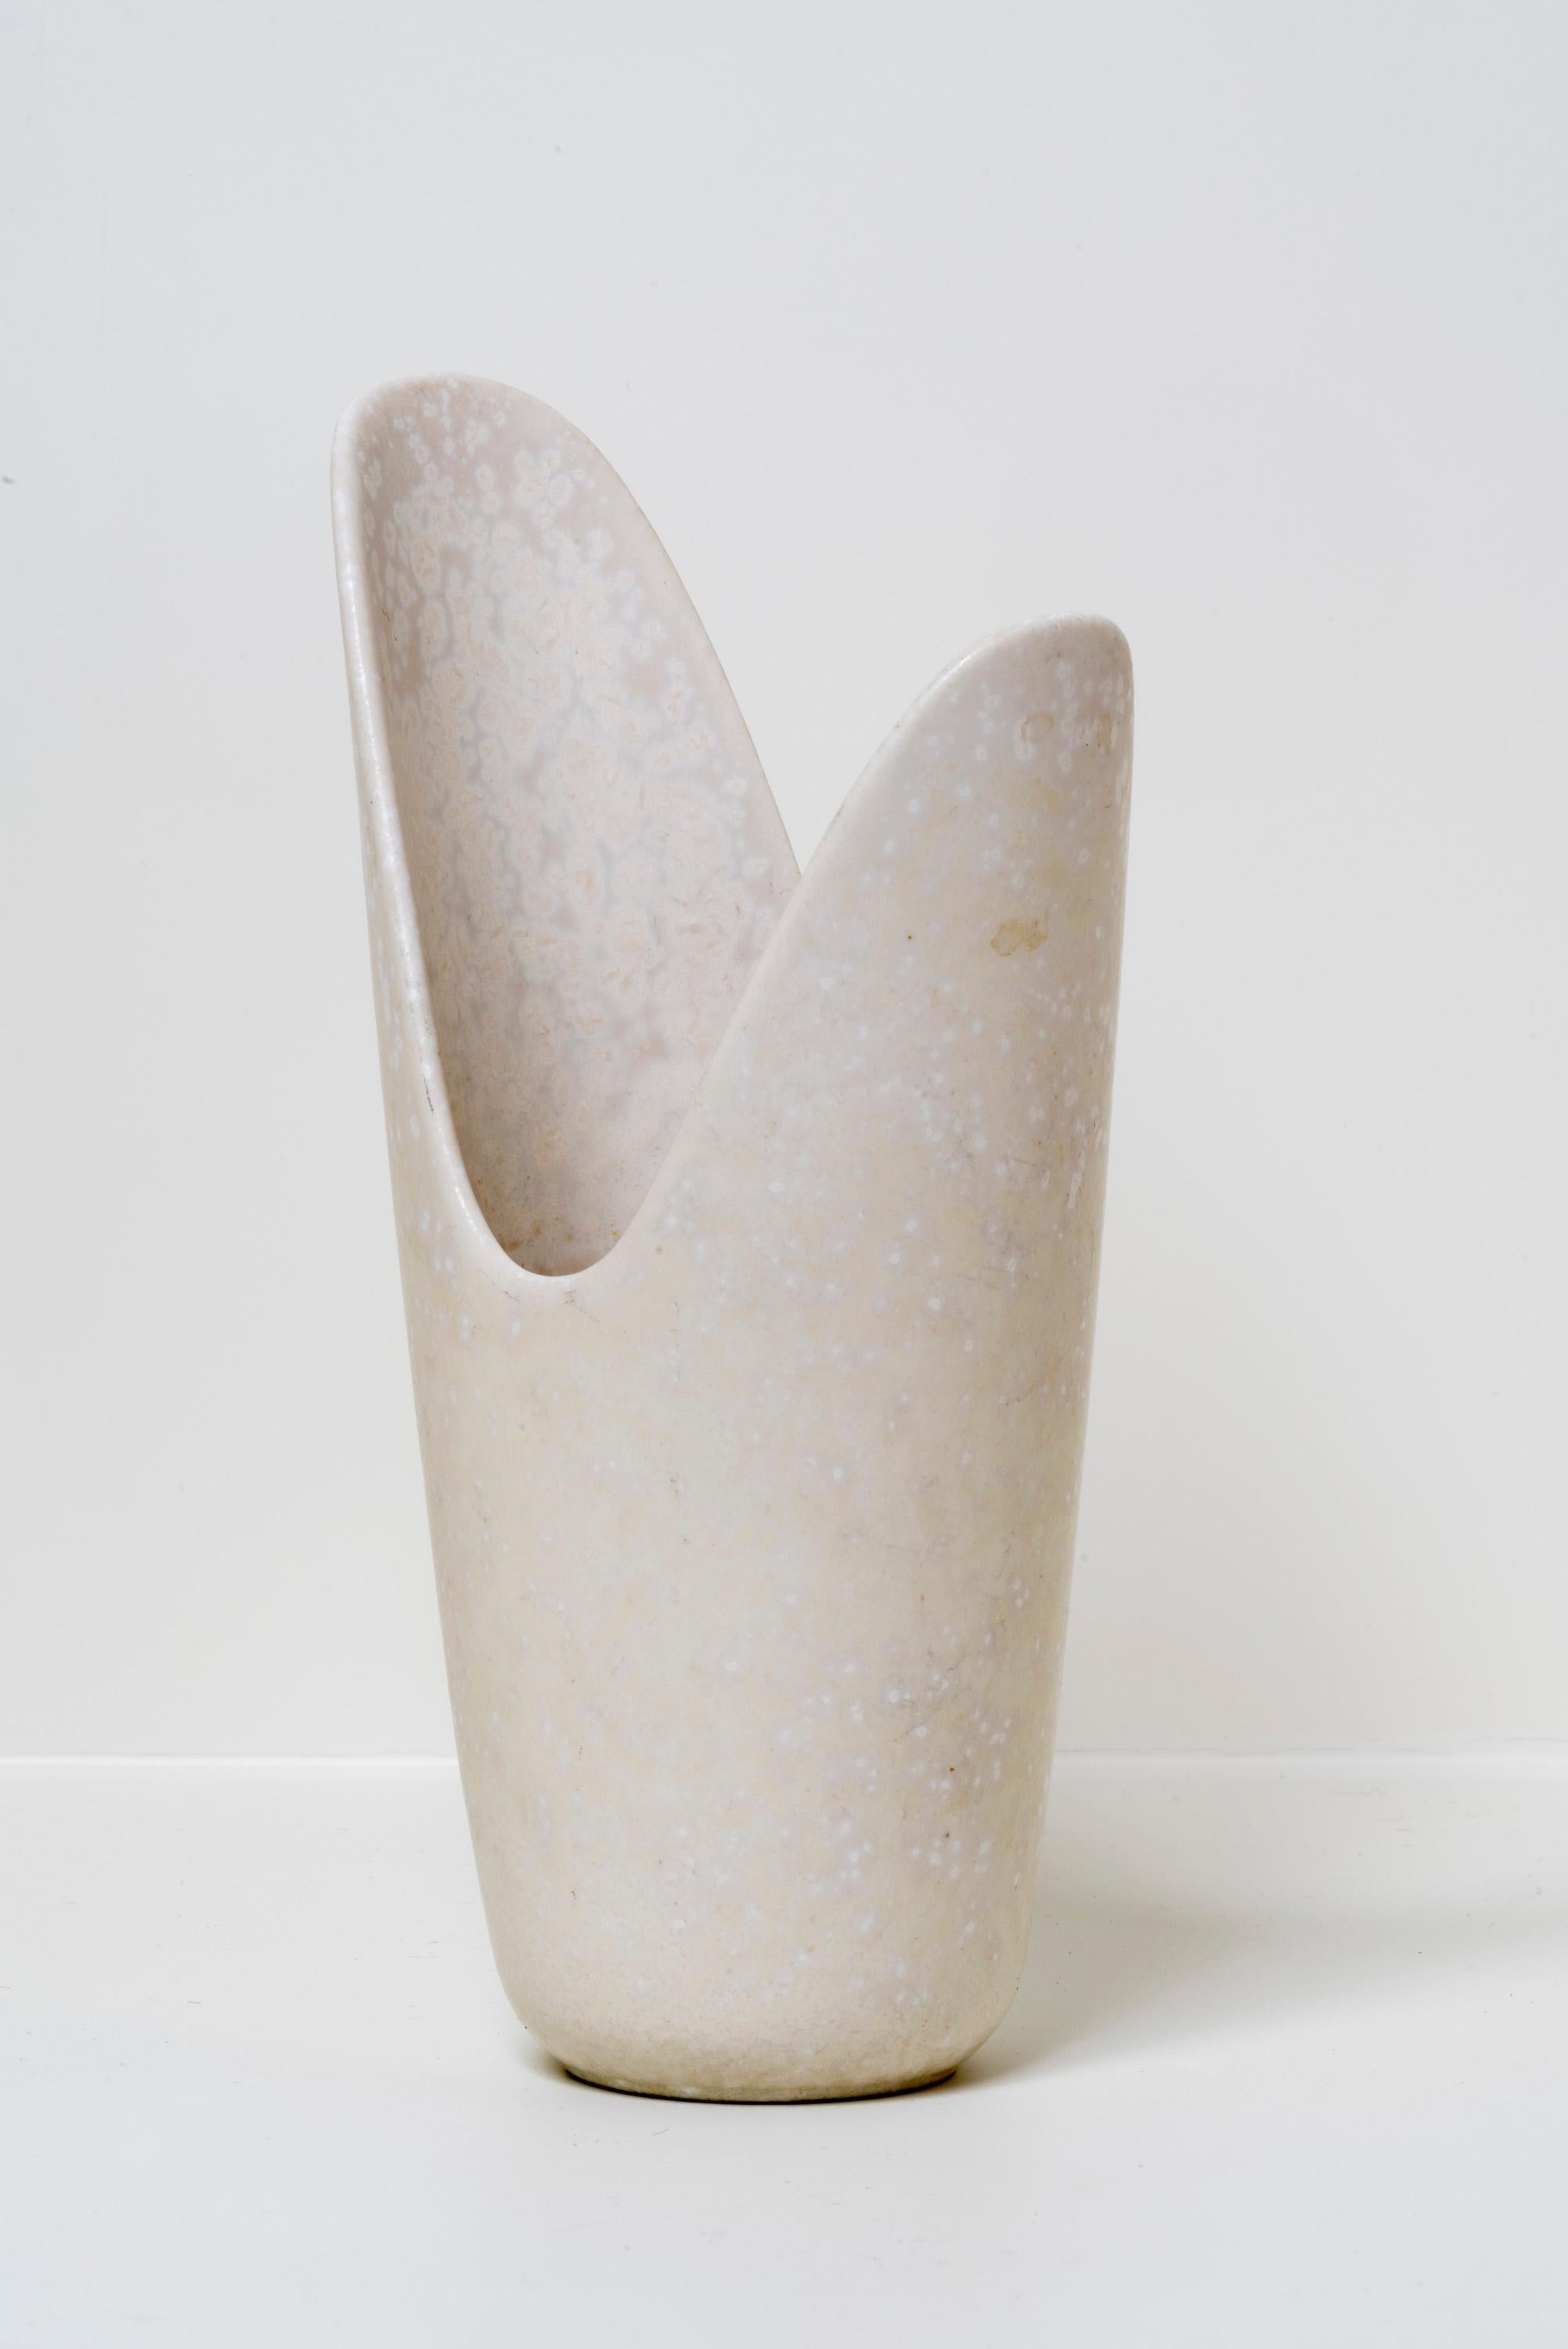 Scandinavian Modern Swedish Modern White Ceramic Vase by Gunnar Nylund 1950's For Sale